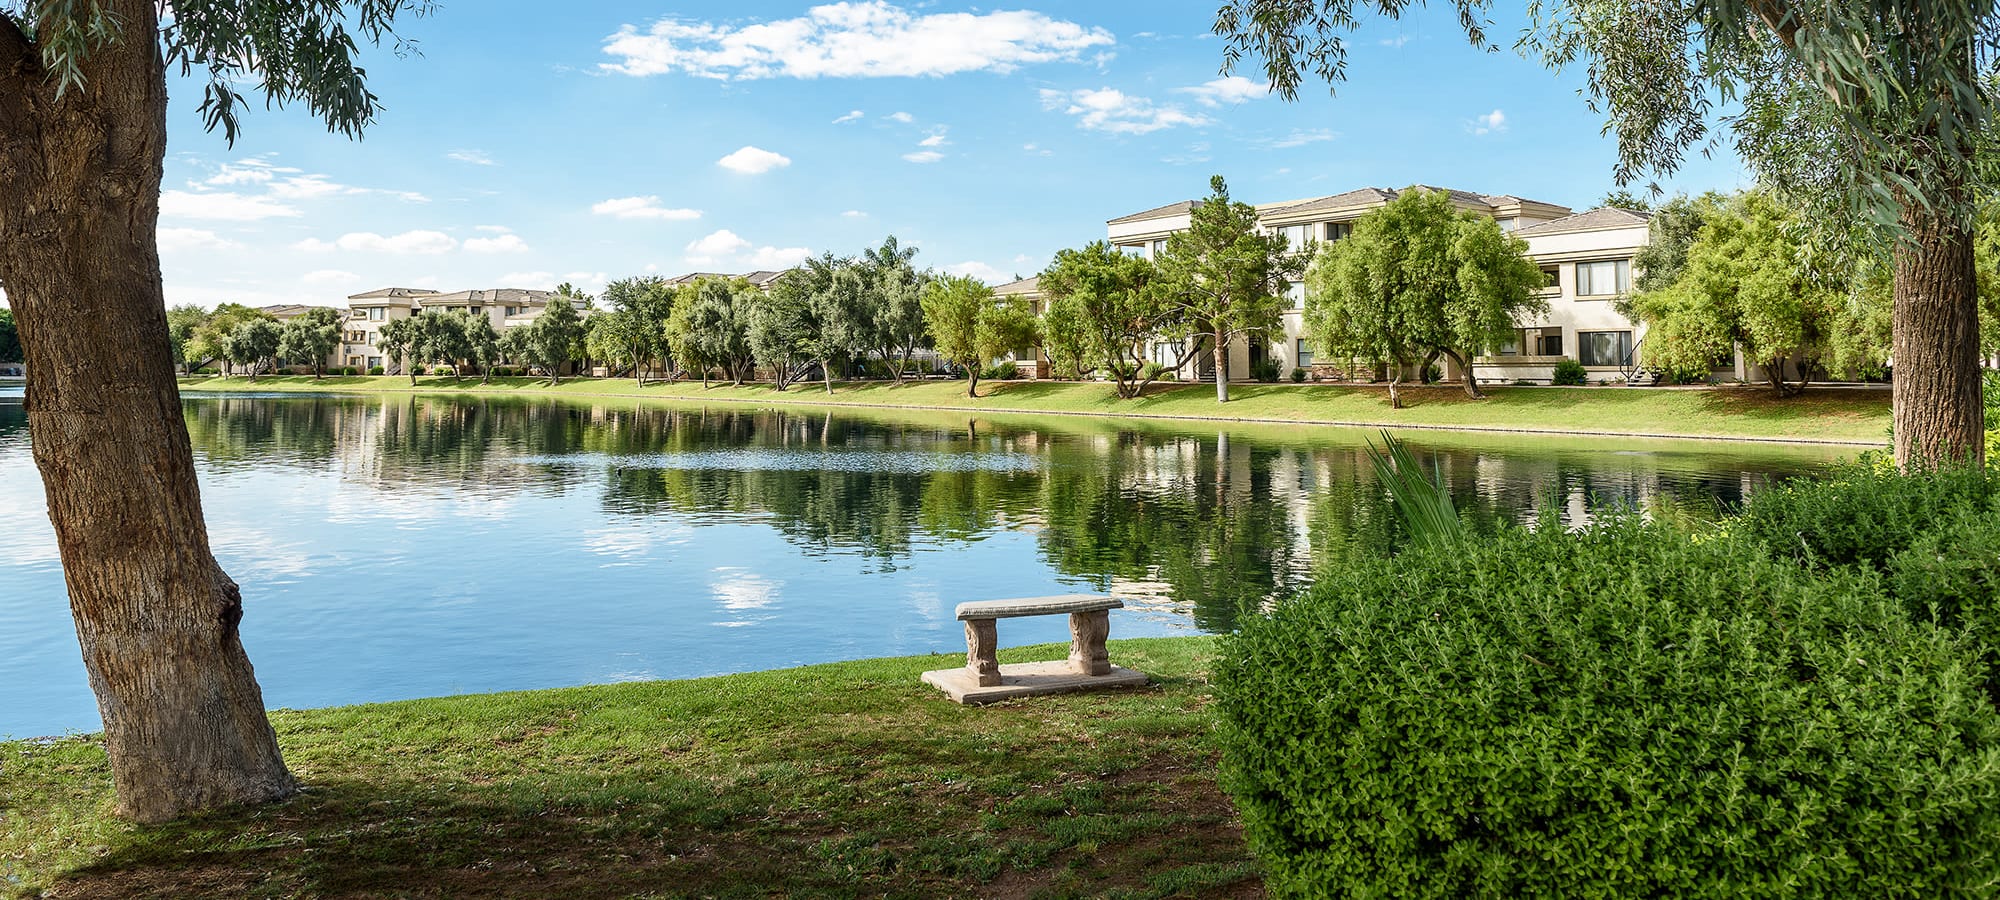 Lakeside view at Waterside at Ocotillo in Chandler, Arizona